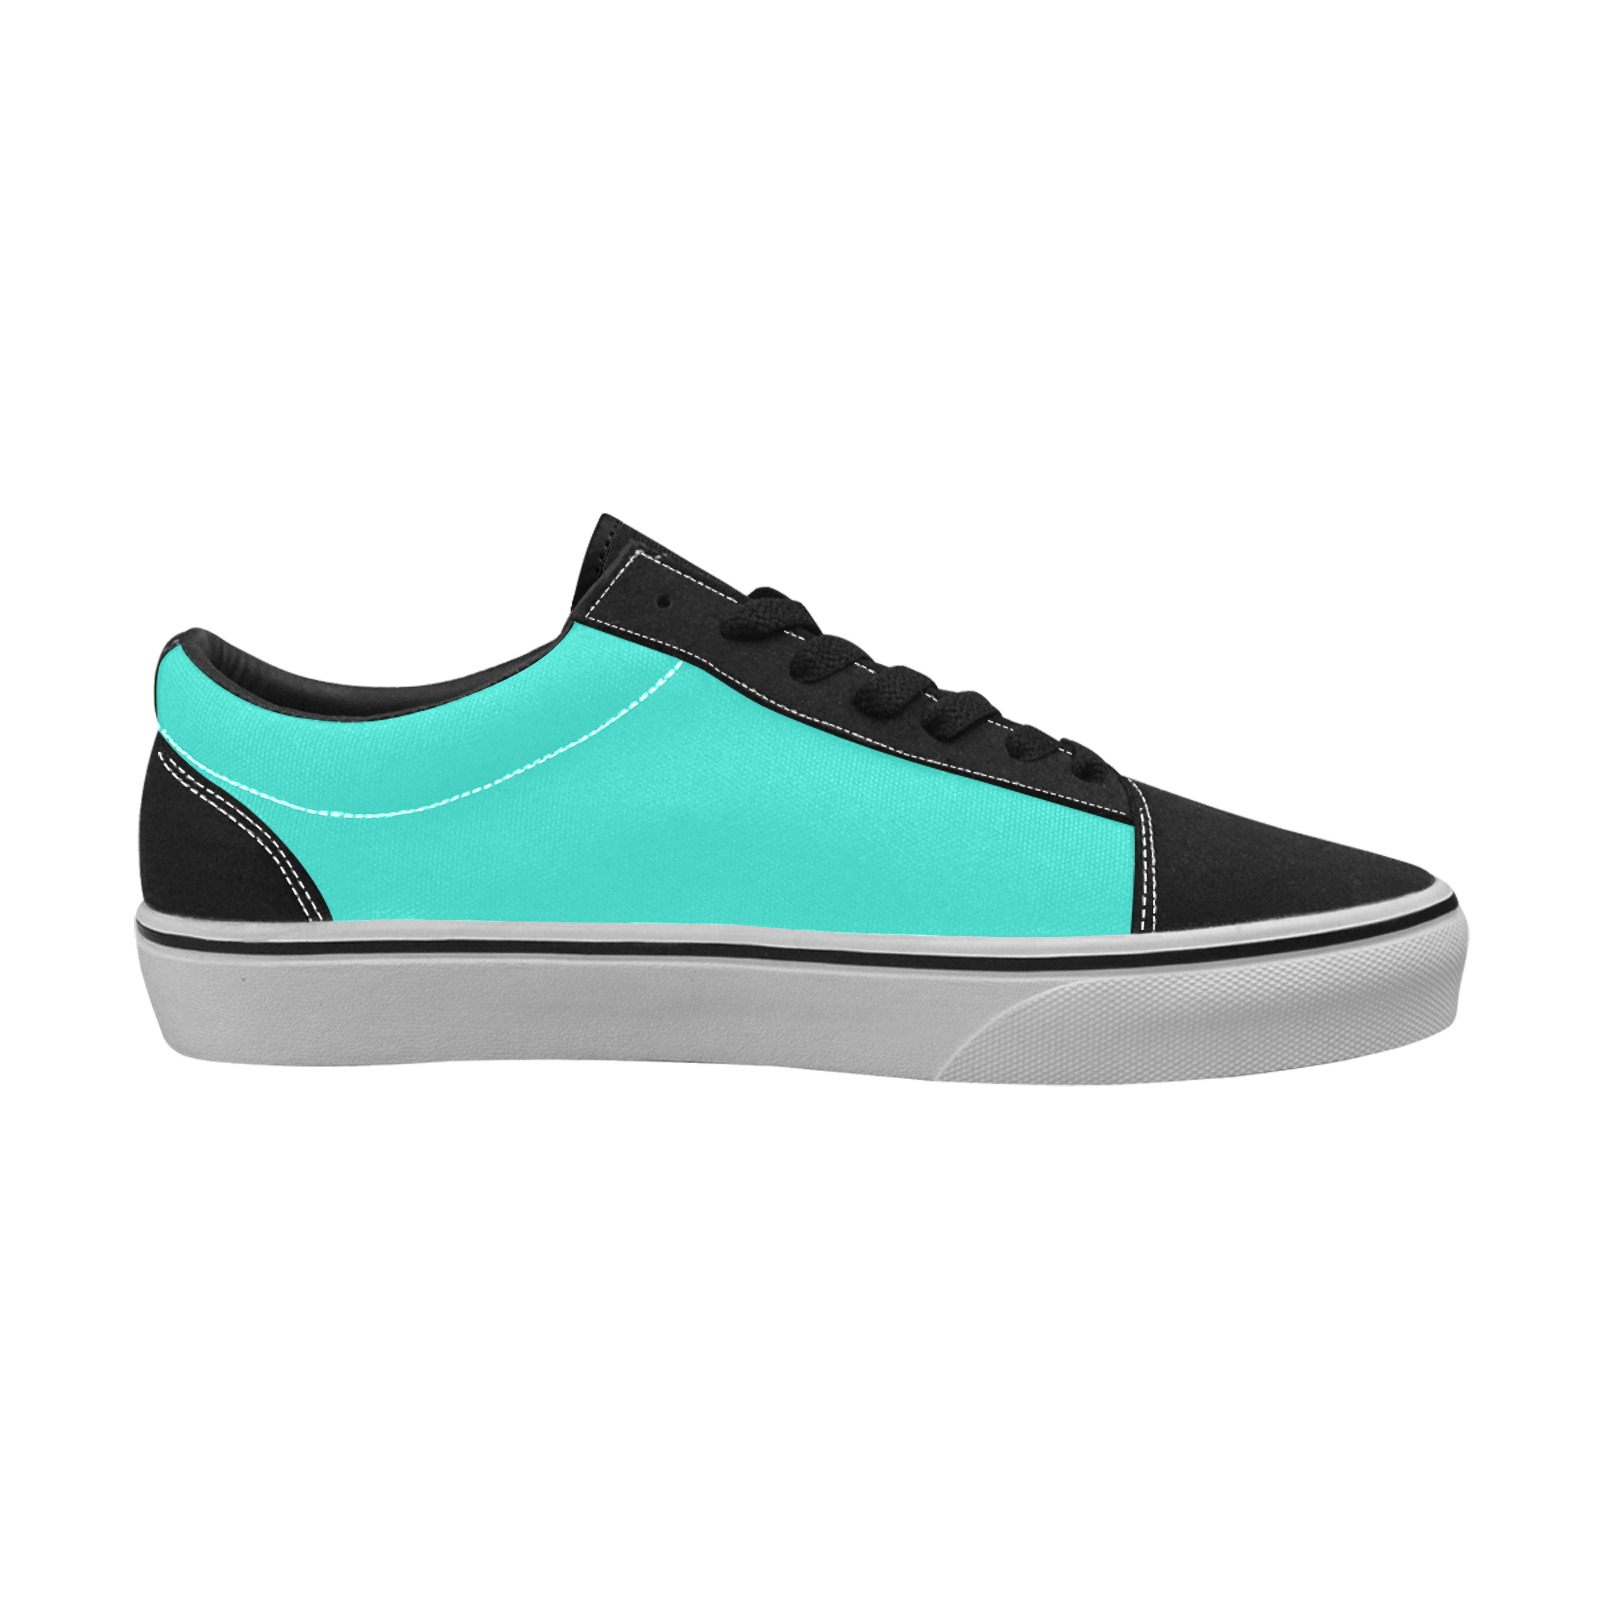 color turquoise Women's Low Top Skateboarding Shoes (Model E001-2)